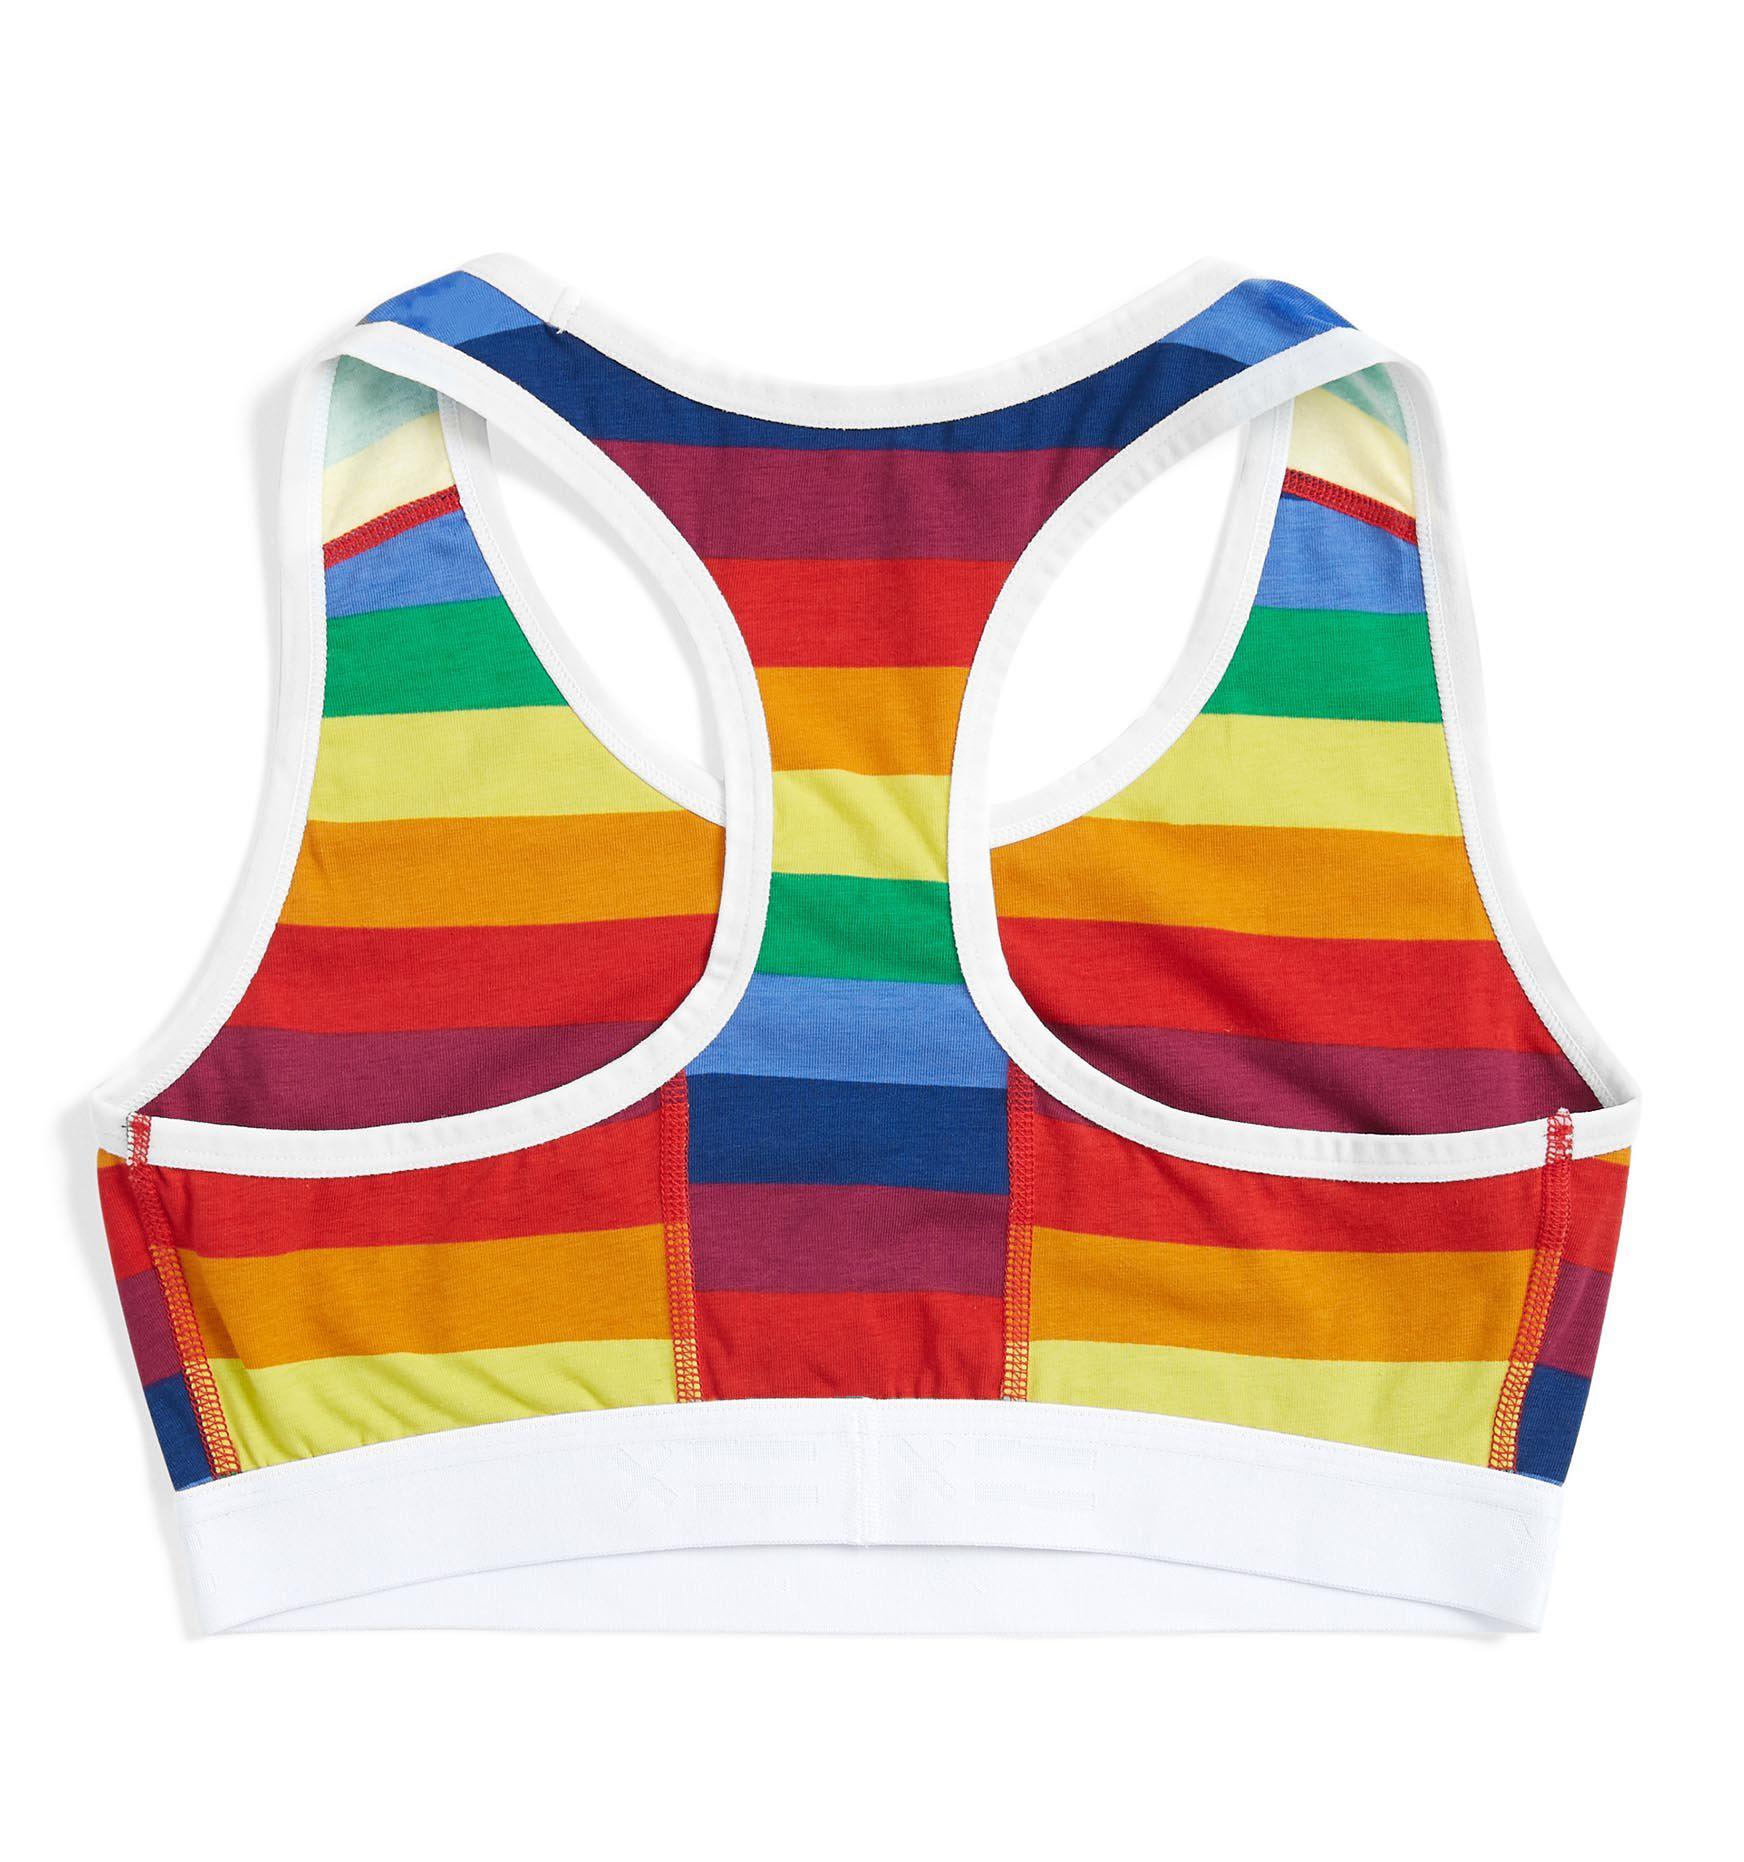 Ombré Rainbow Sports Bra  Rainbow Spectrum Workout Top – On Trend Shirts